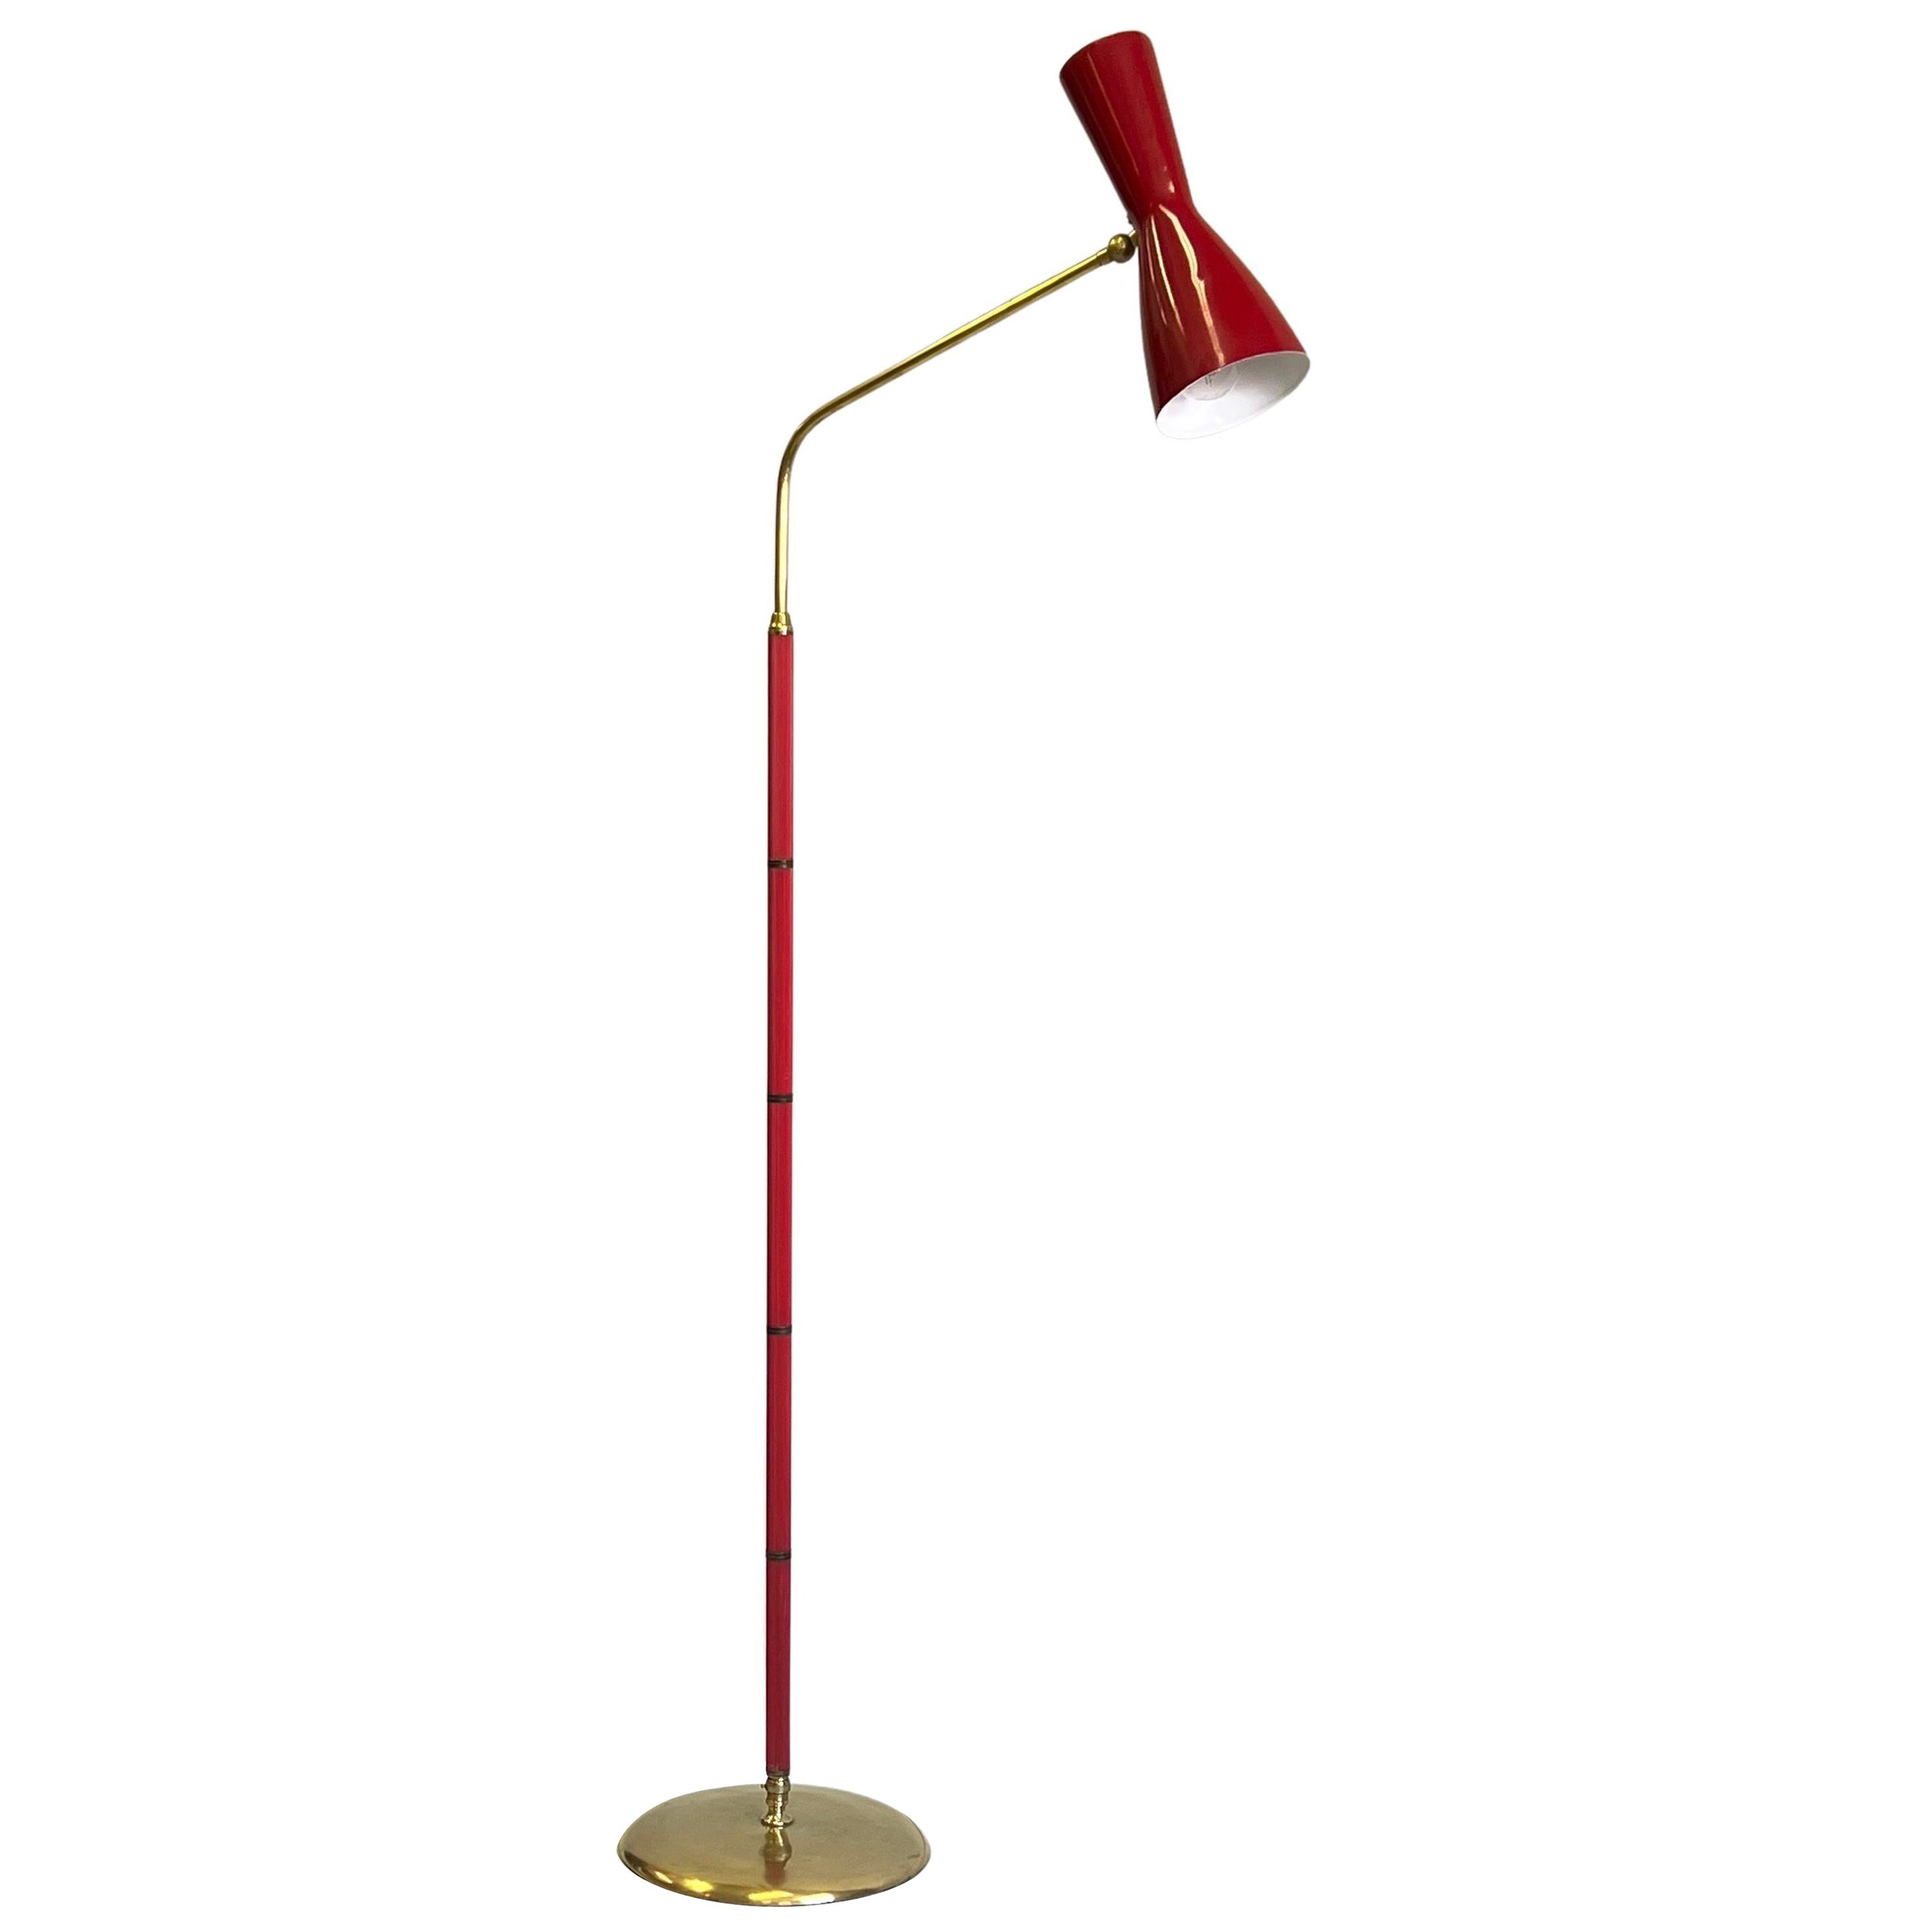 Italian Mid-Century Modern Articulating Floor Lamp, Vittoriano Vigano & Arteluce